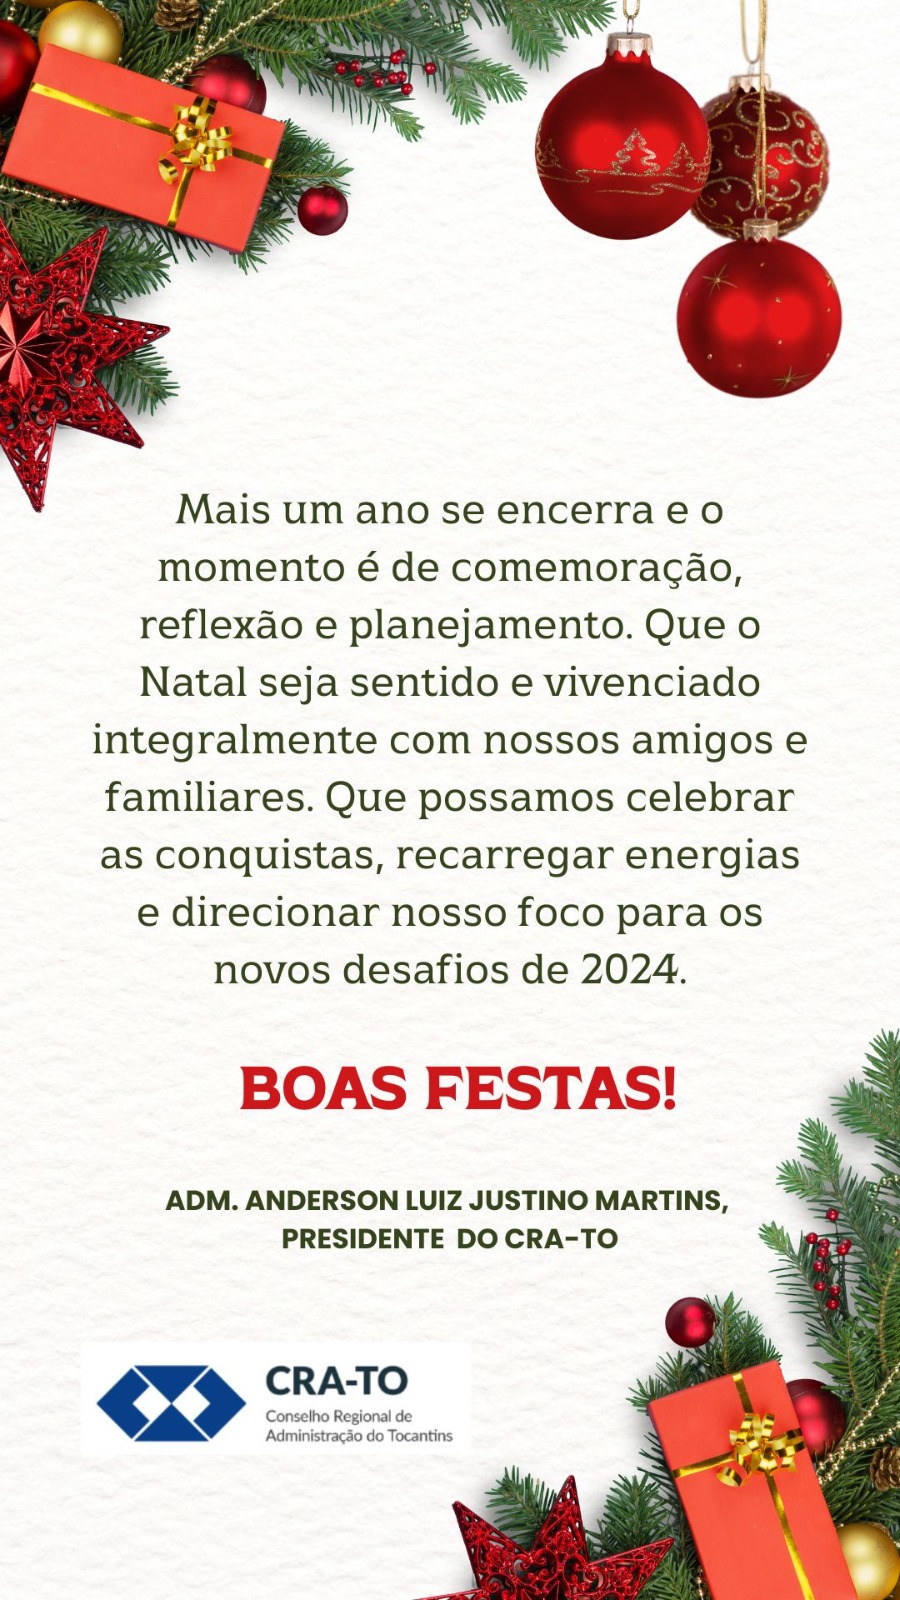 You are currently viewing O Presidente Adm. Anderson Luiz Justino Martins deseja a todos Boas Festas de Final de Ano.